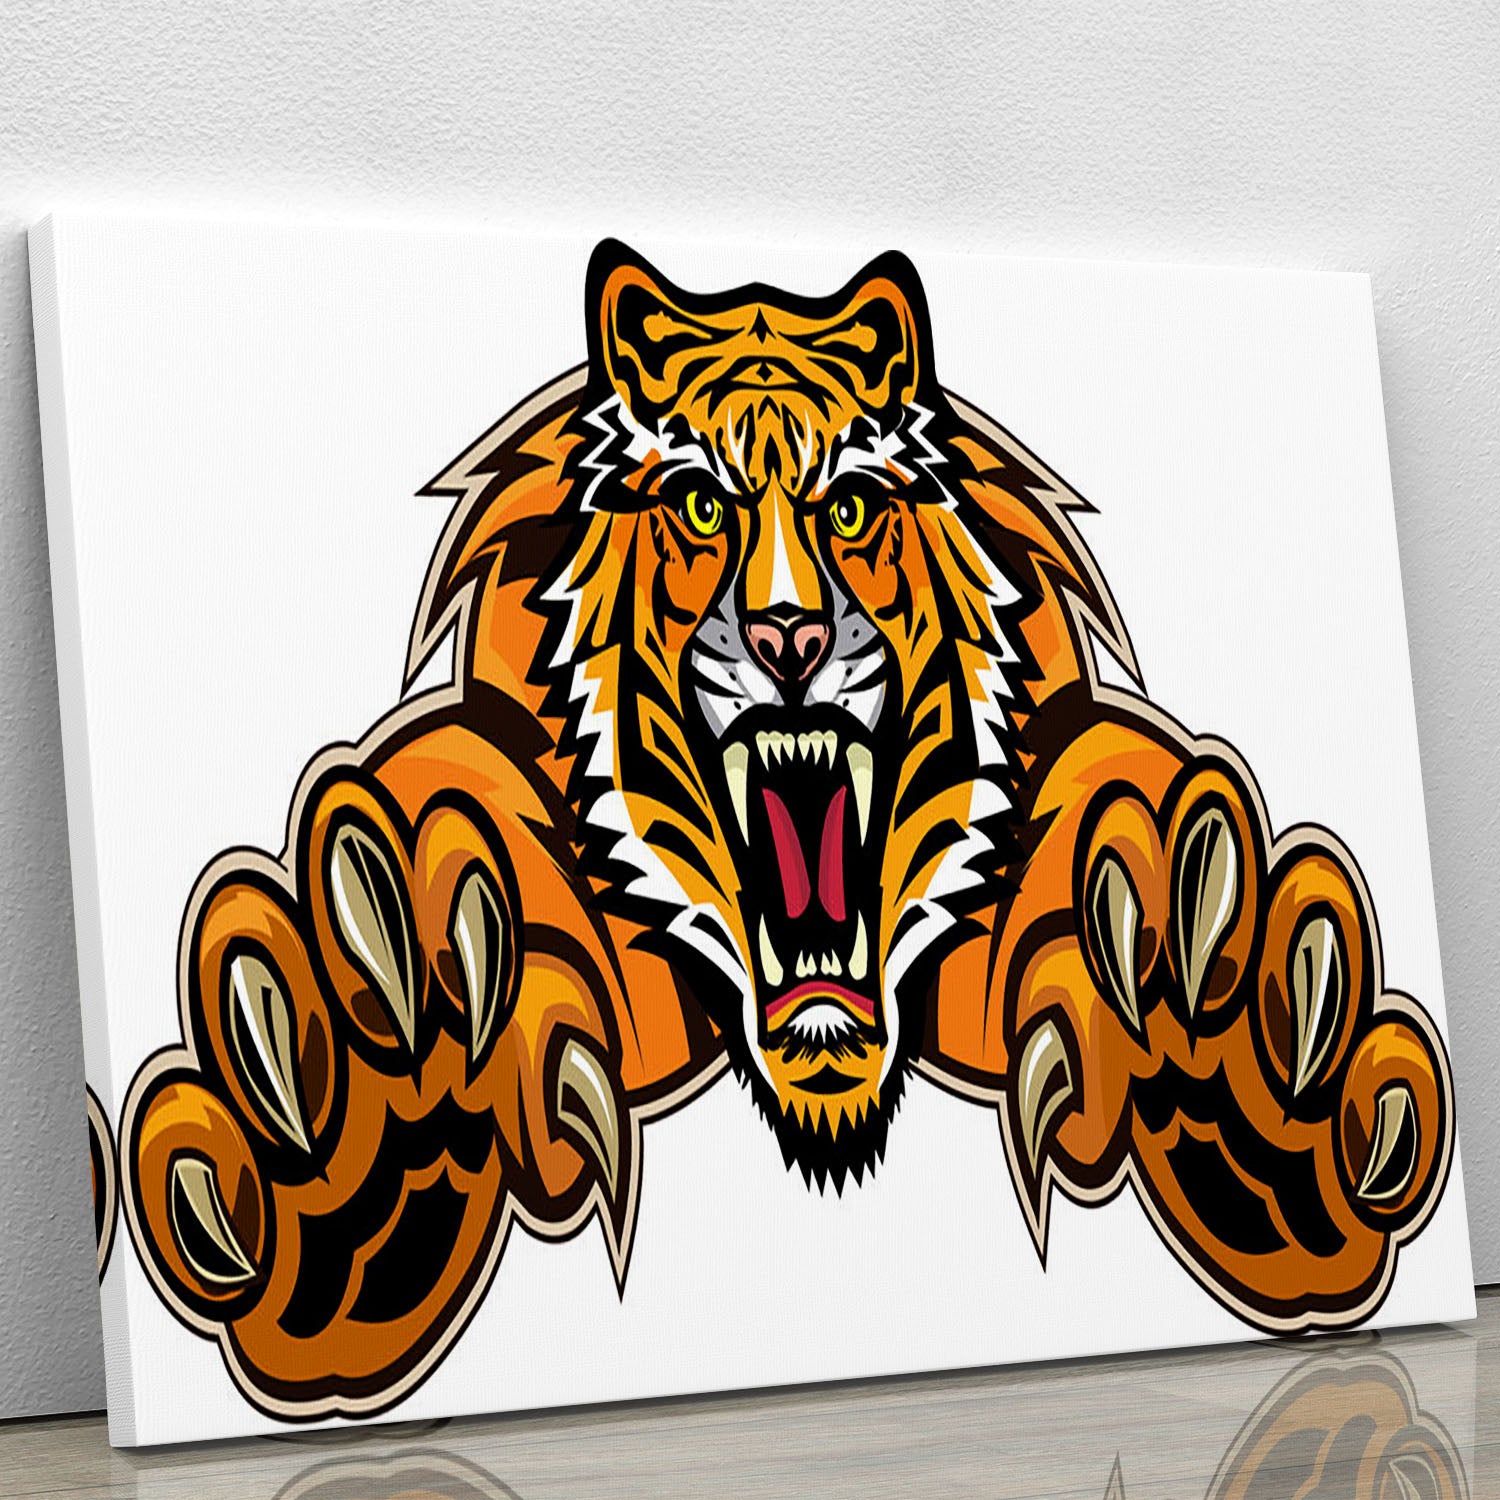 Tiger jump Canvas Print or Poster - Canvas Art Rocks - 1